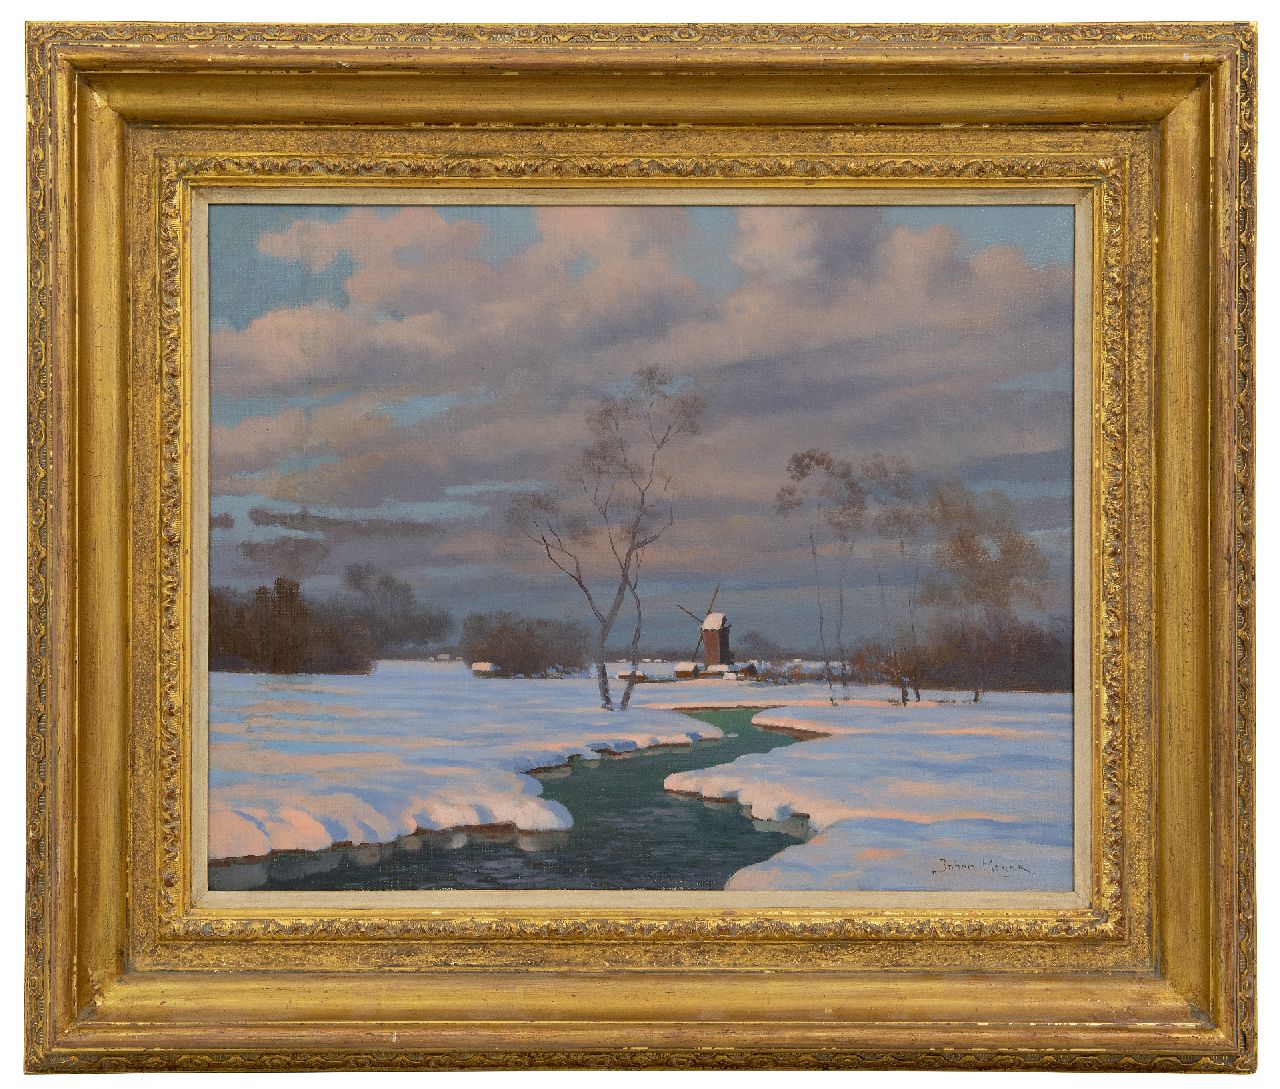 Meijer J.  | Johannes 'Johan' Meijer | Paintings offered for sale | Snowy landscape with windmill, oil on canvas 40.1 x 50.0 cm, signed l.r.